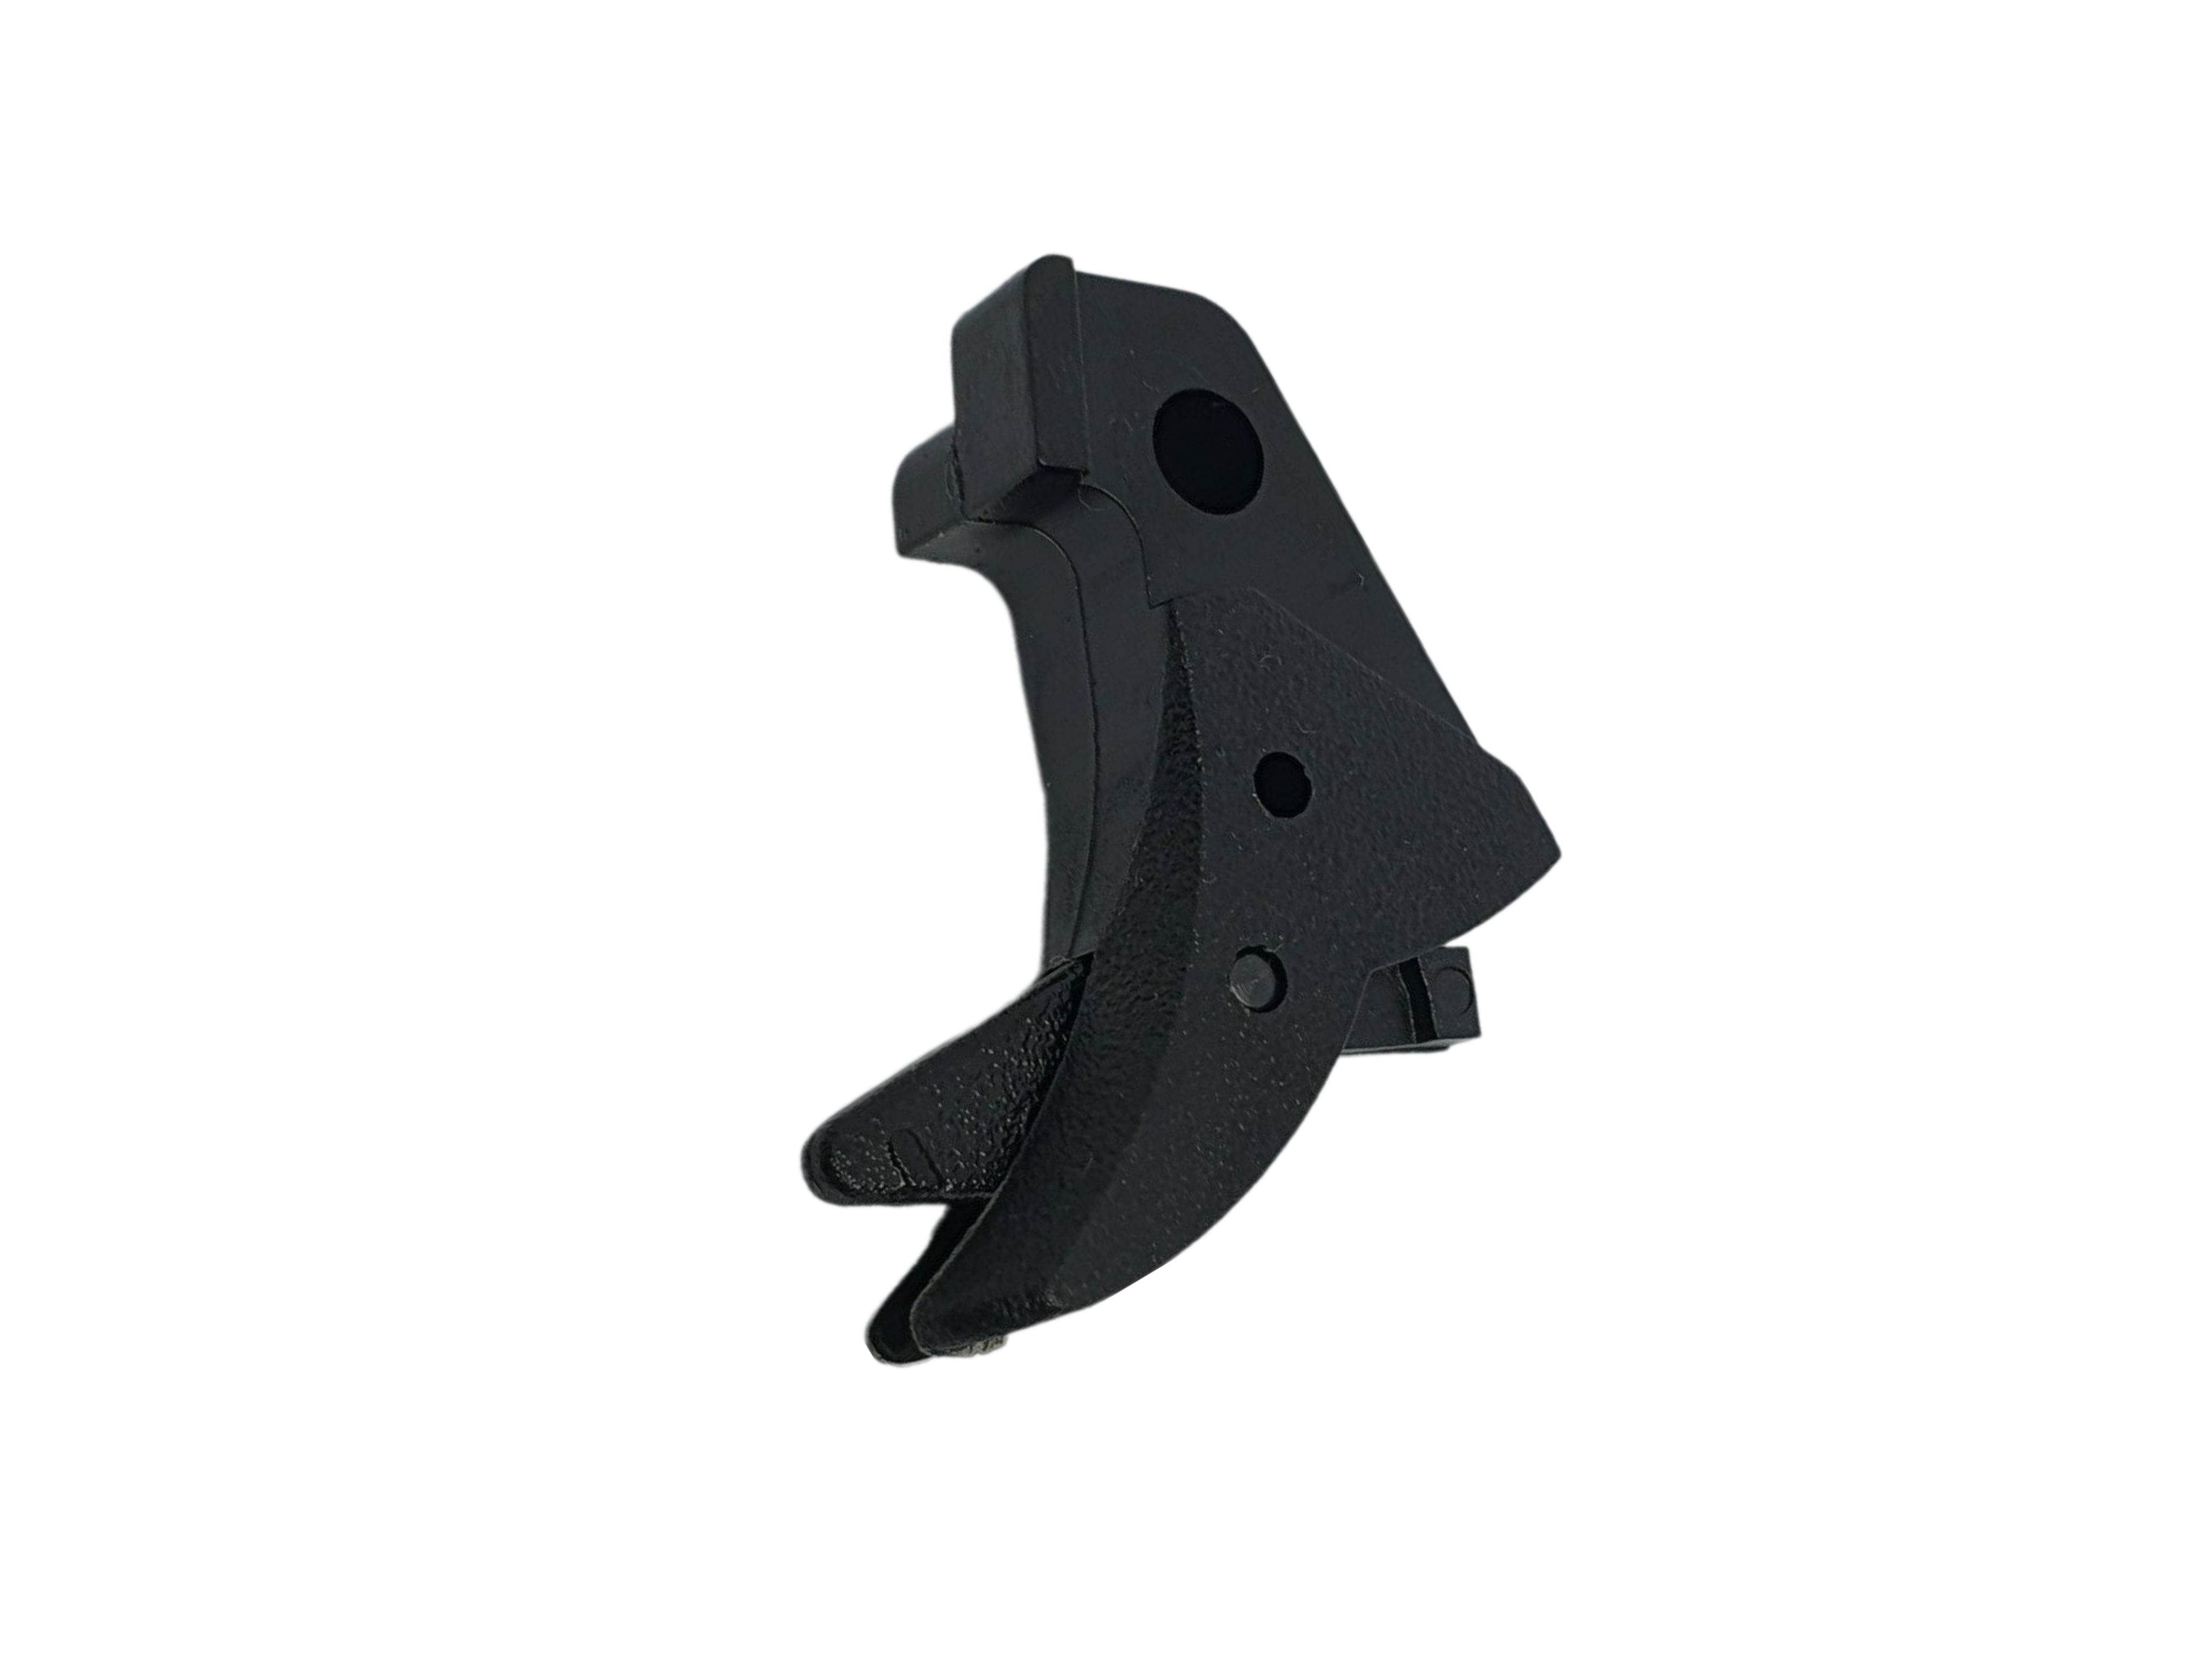 WE G17 G18c replacement part 14 15 16 - trigger set - Ebog Designs